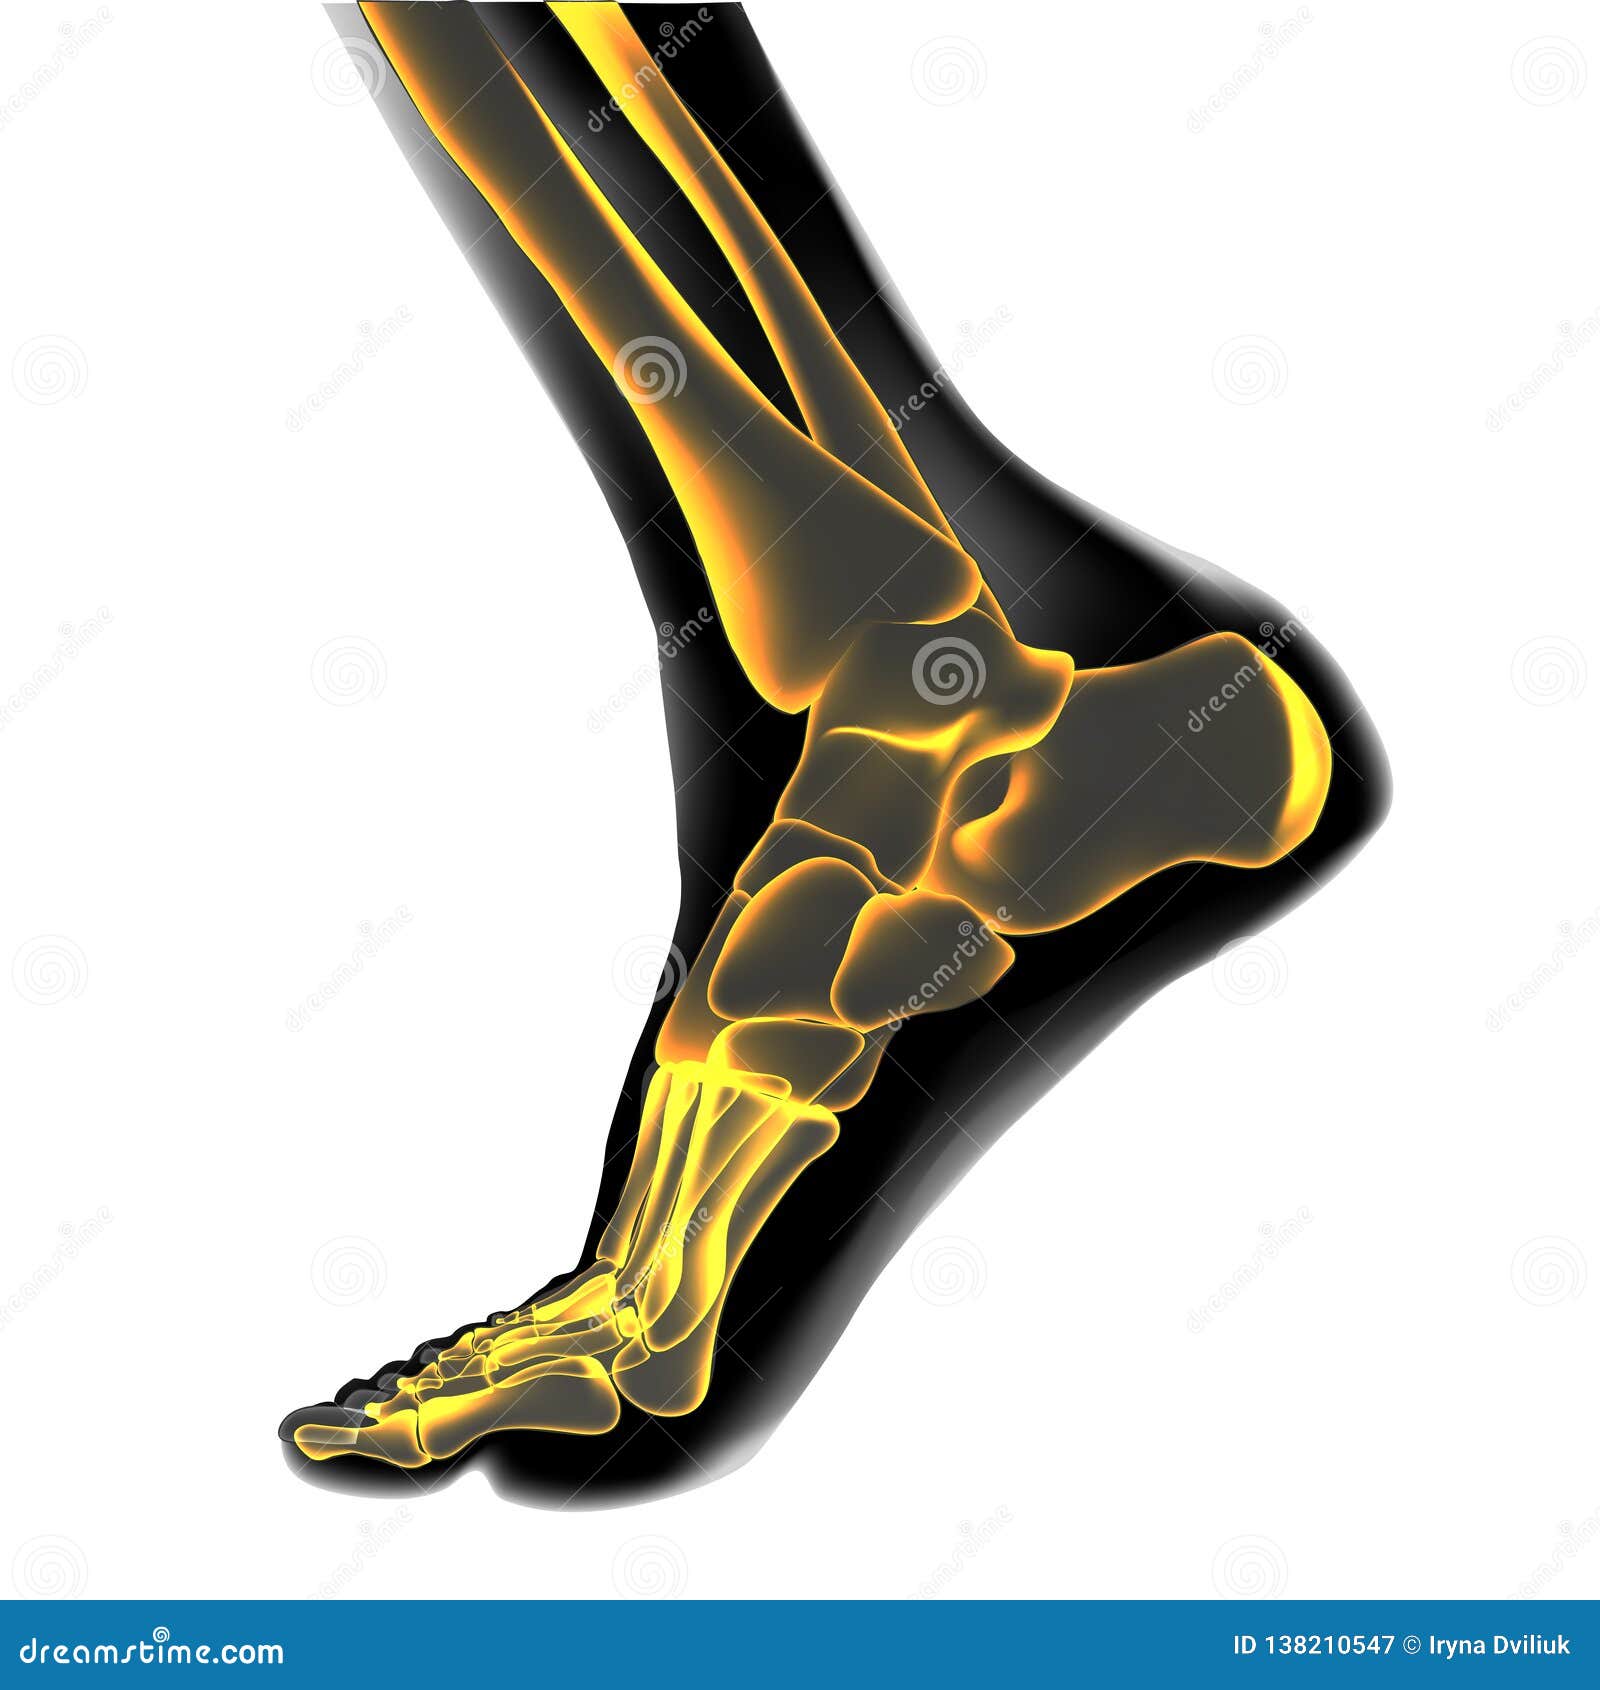 visualization of bones of foot.